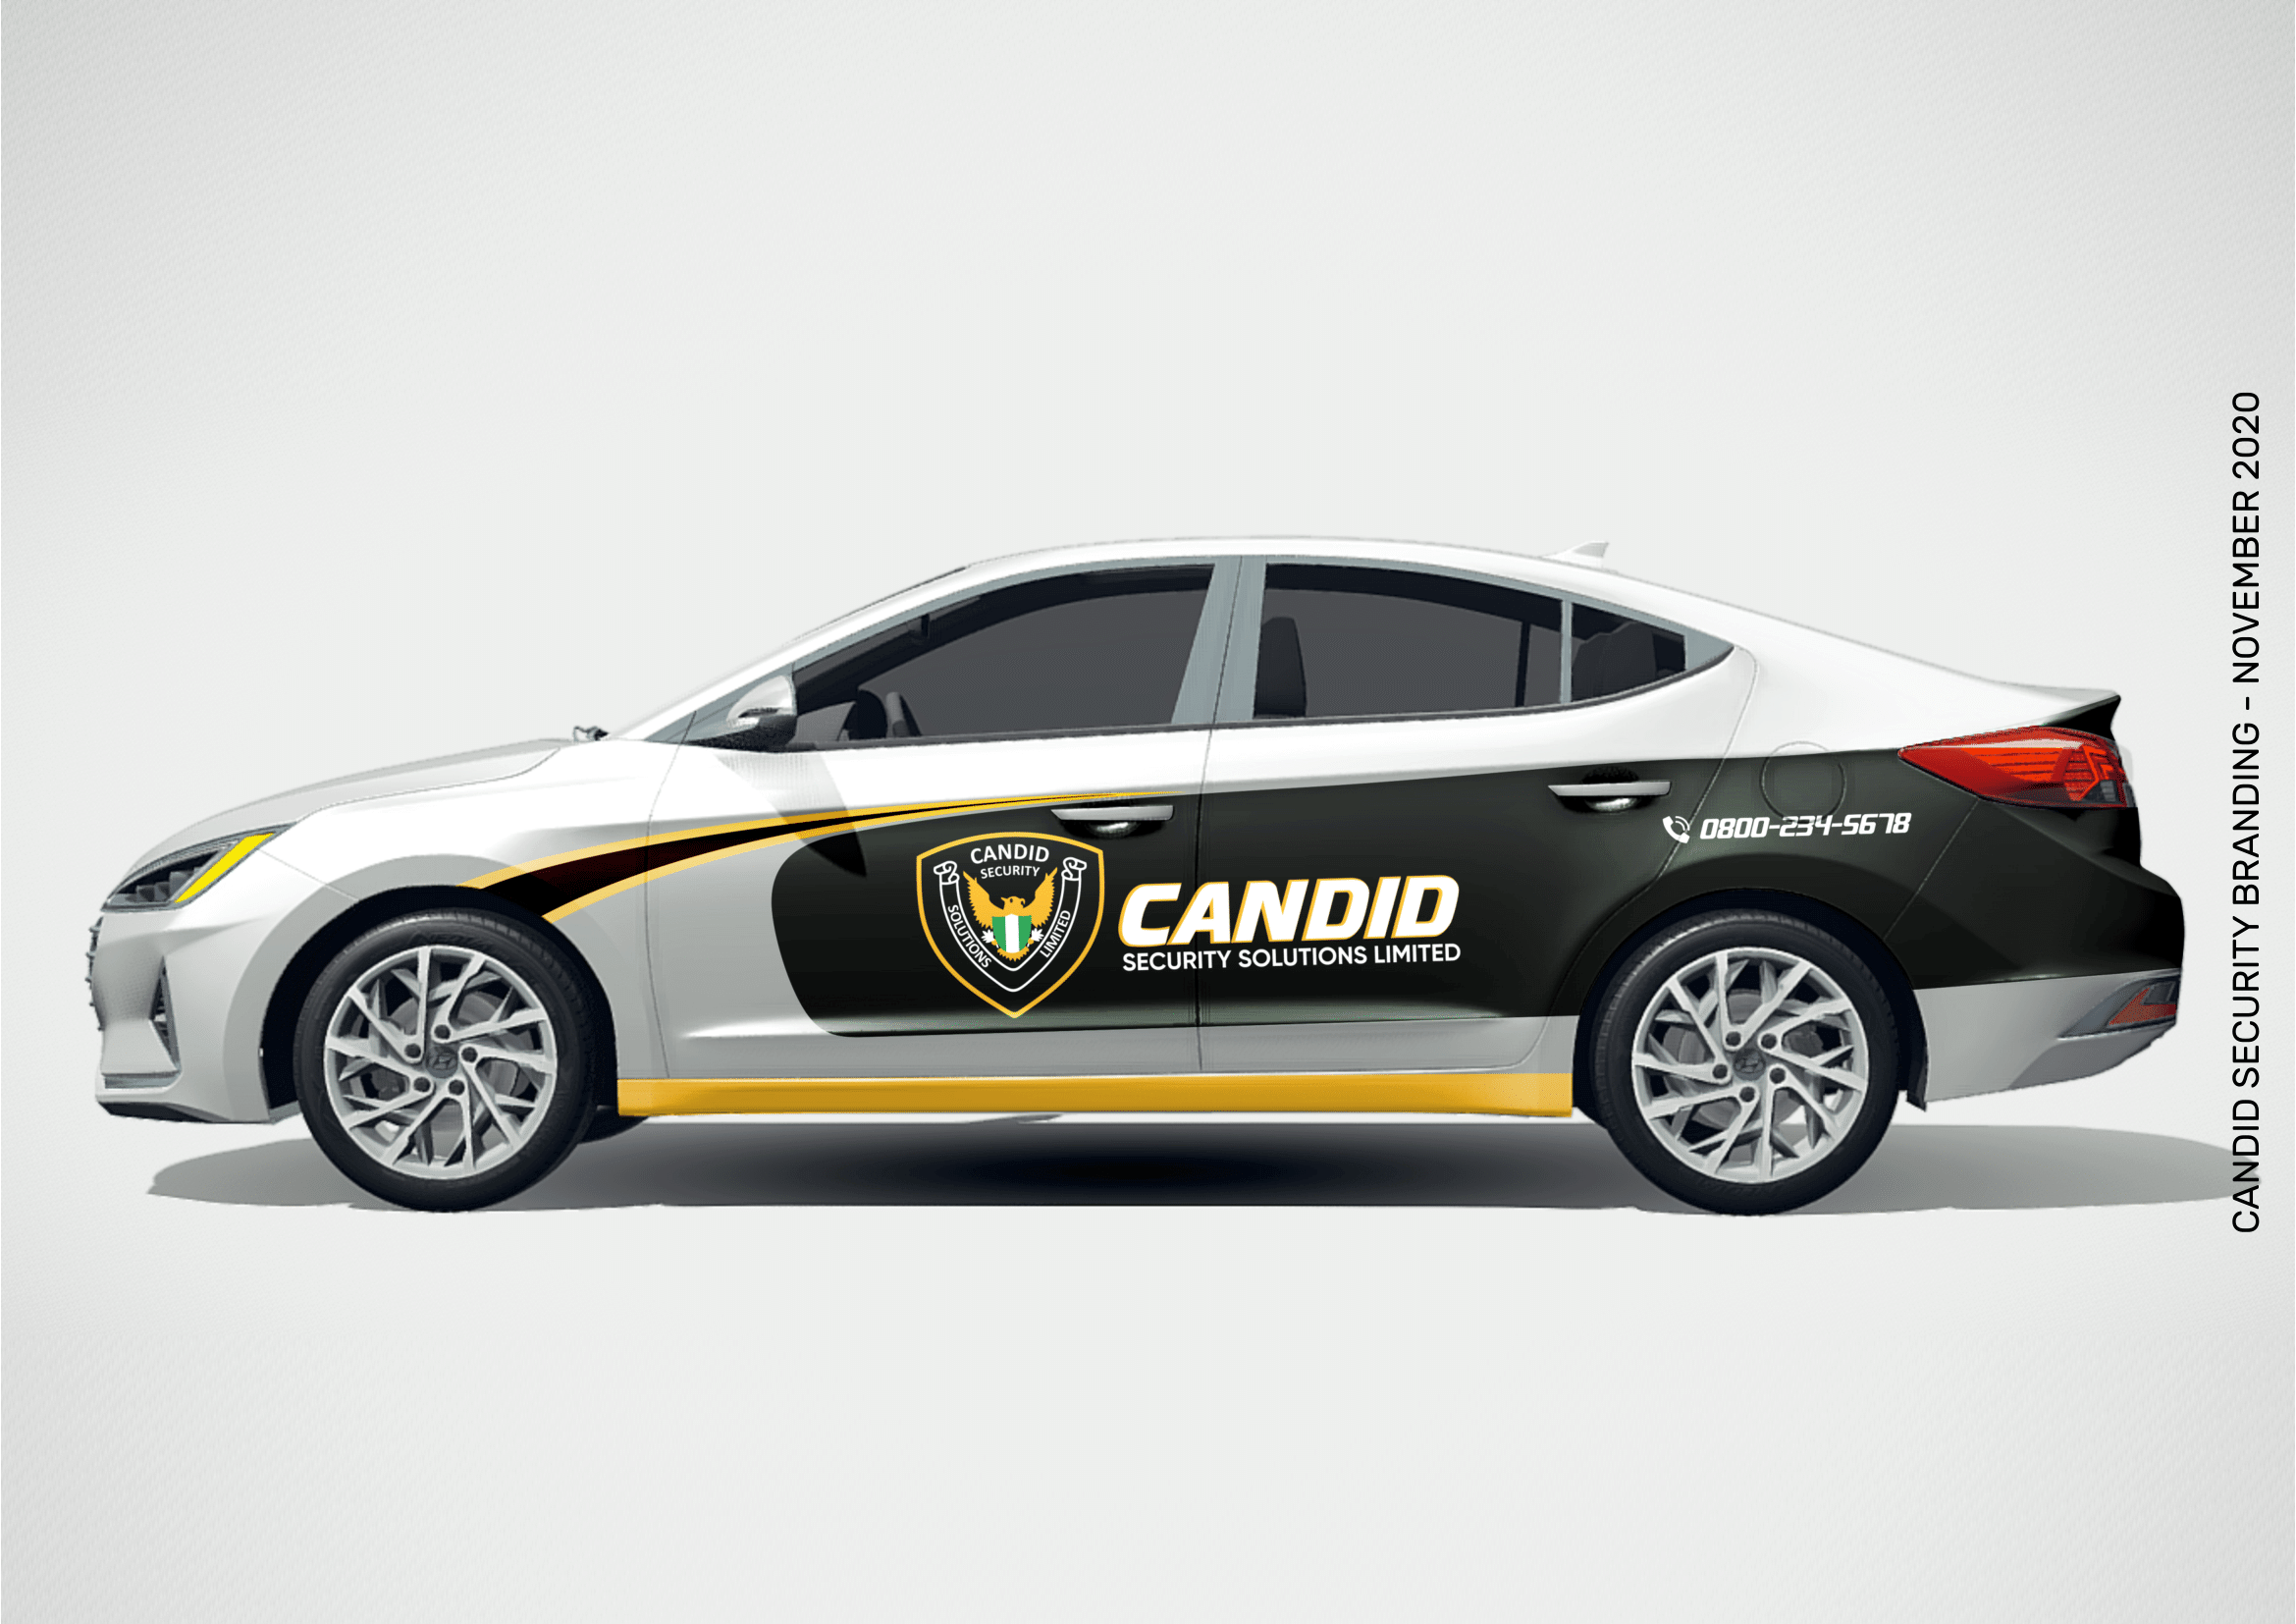 Side view of car branding